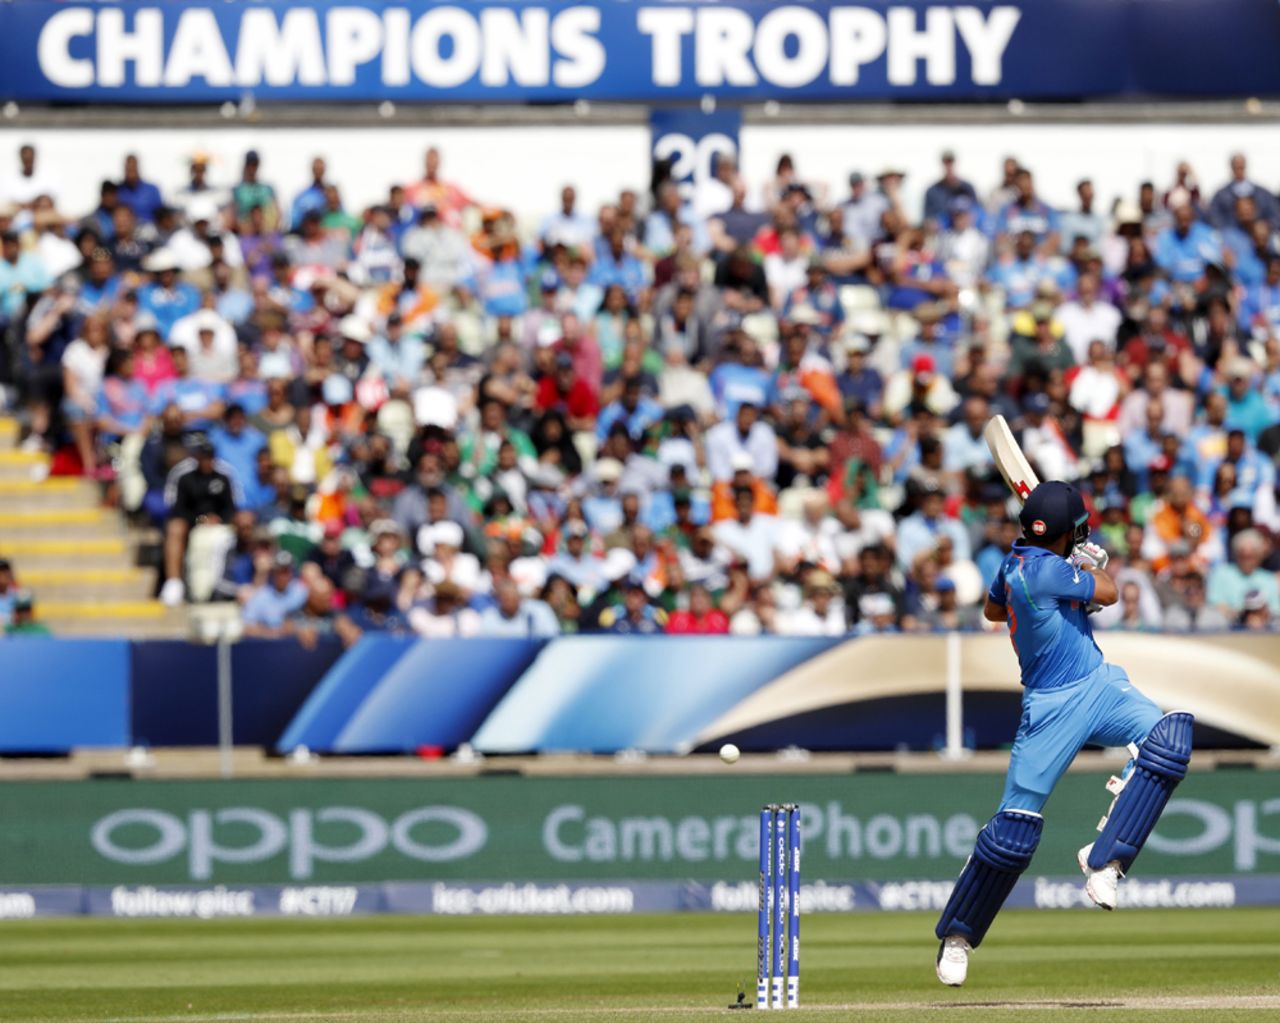 Virat Kohli became the quickest batsman to reach 8000 runs in ODIs, Bangladesh v India, Champions Trophy 2017, Edgbaston, June 15, 2017